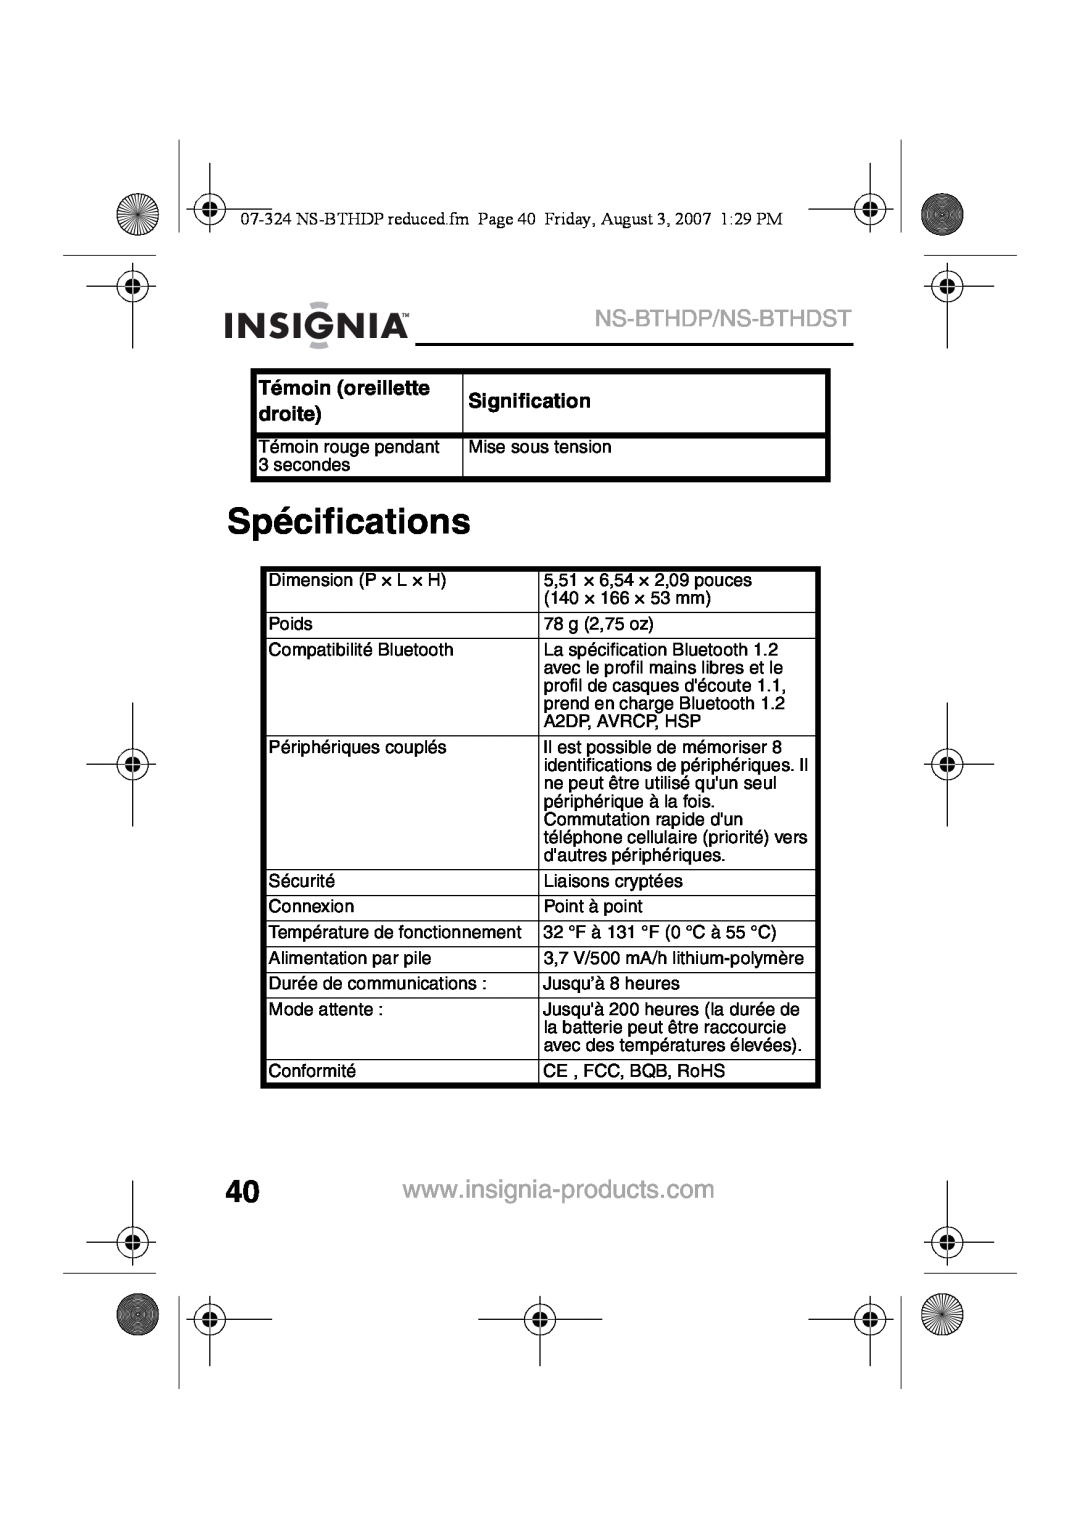 Insignia NS-BTHDST manual Spécifications, Ns-Bthdp/Ns-Bthdst, Témoin oreillette, Signification, droite 